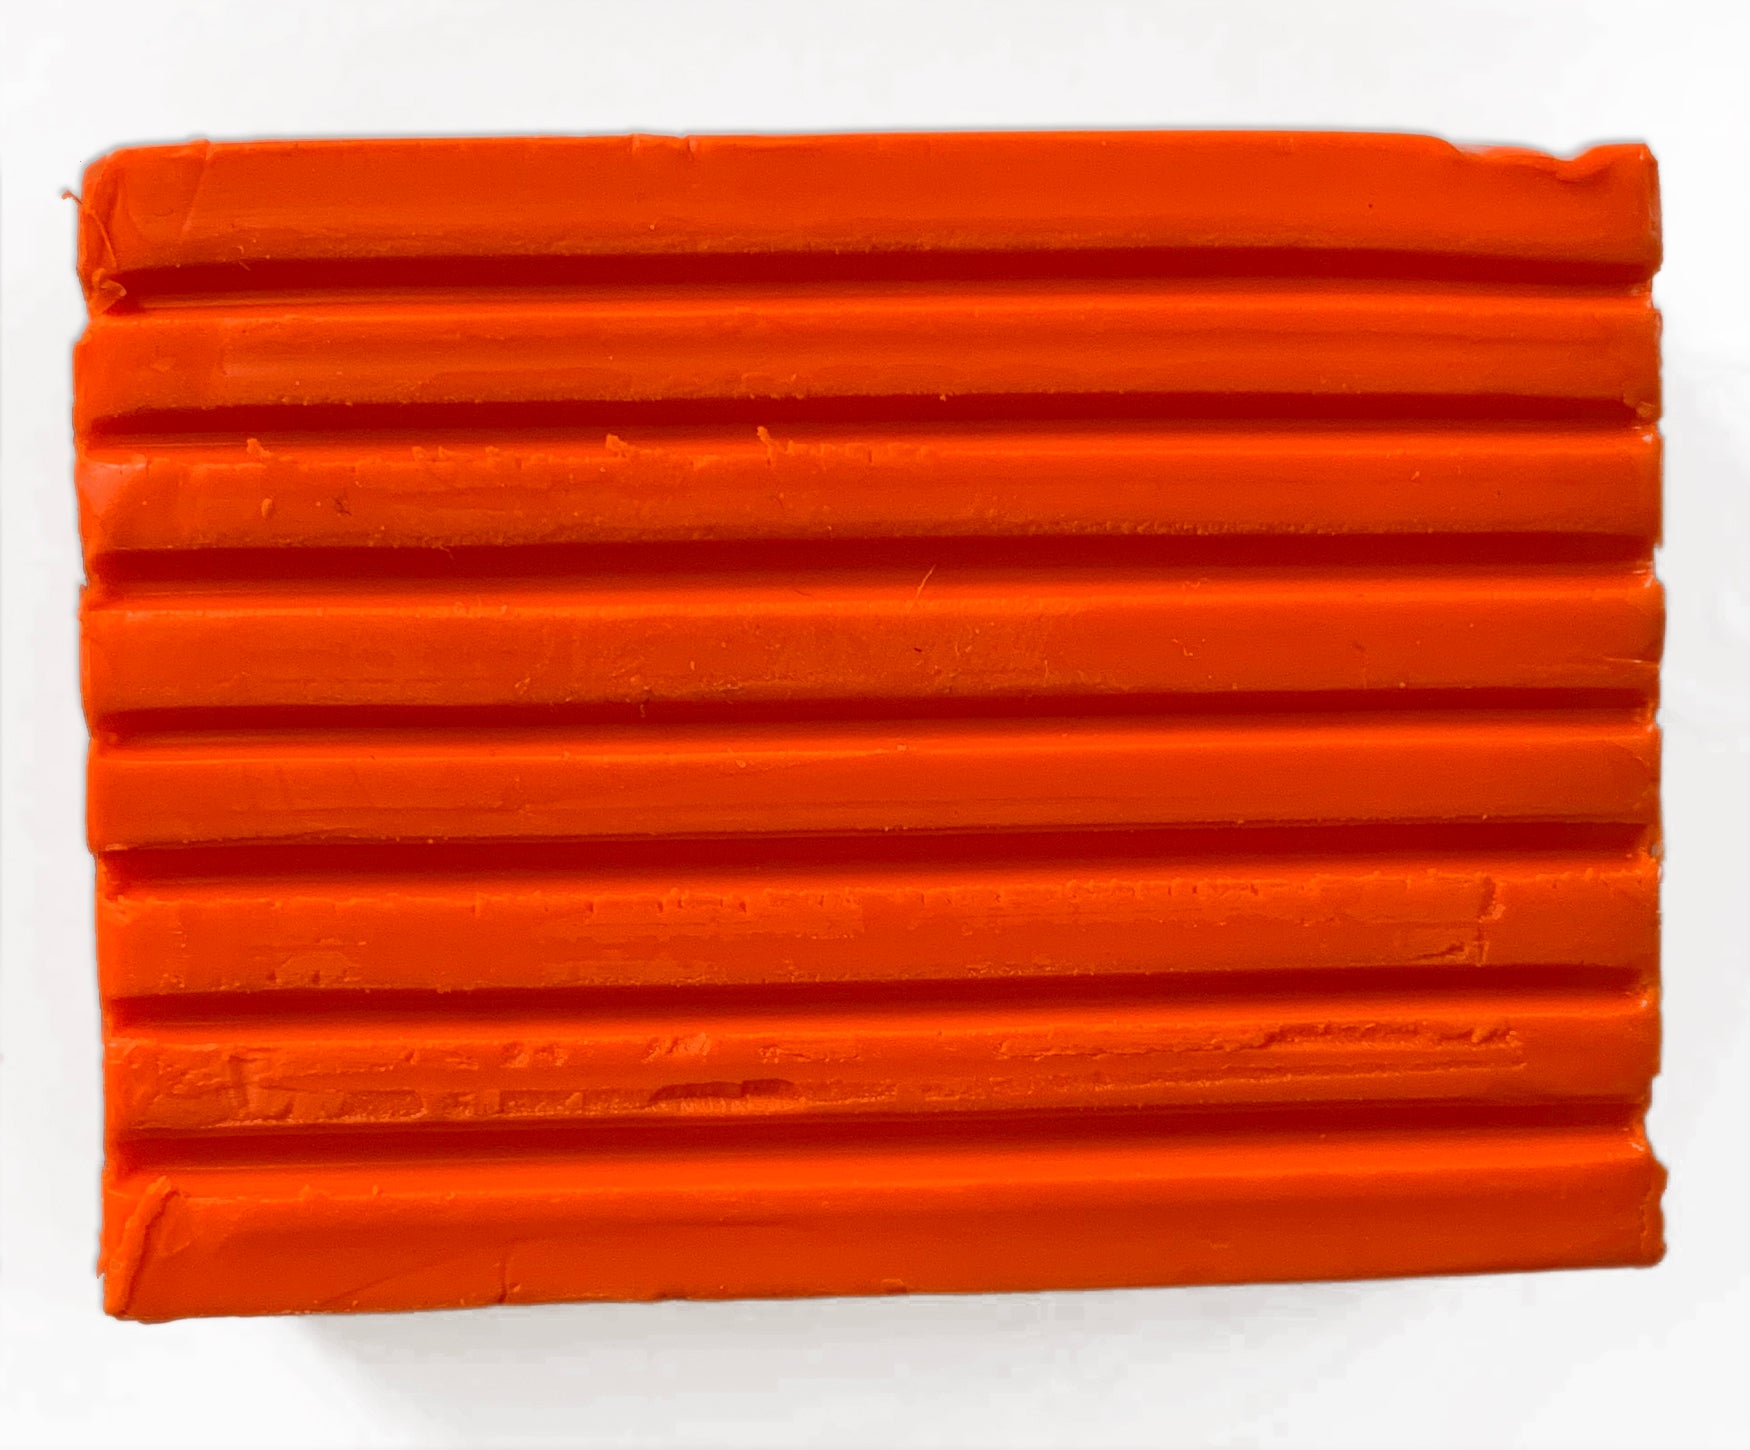 Orange 2 oz - FIMO Professional Modeling Clay